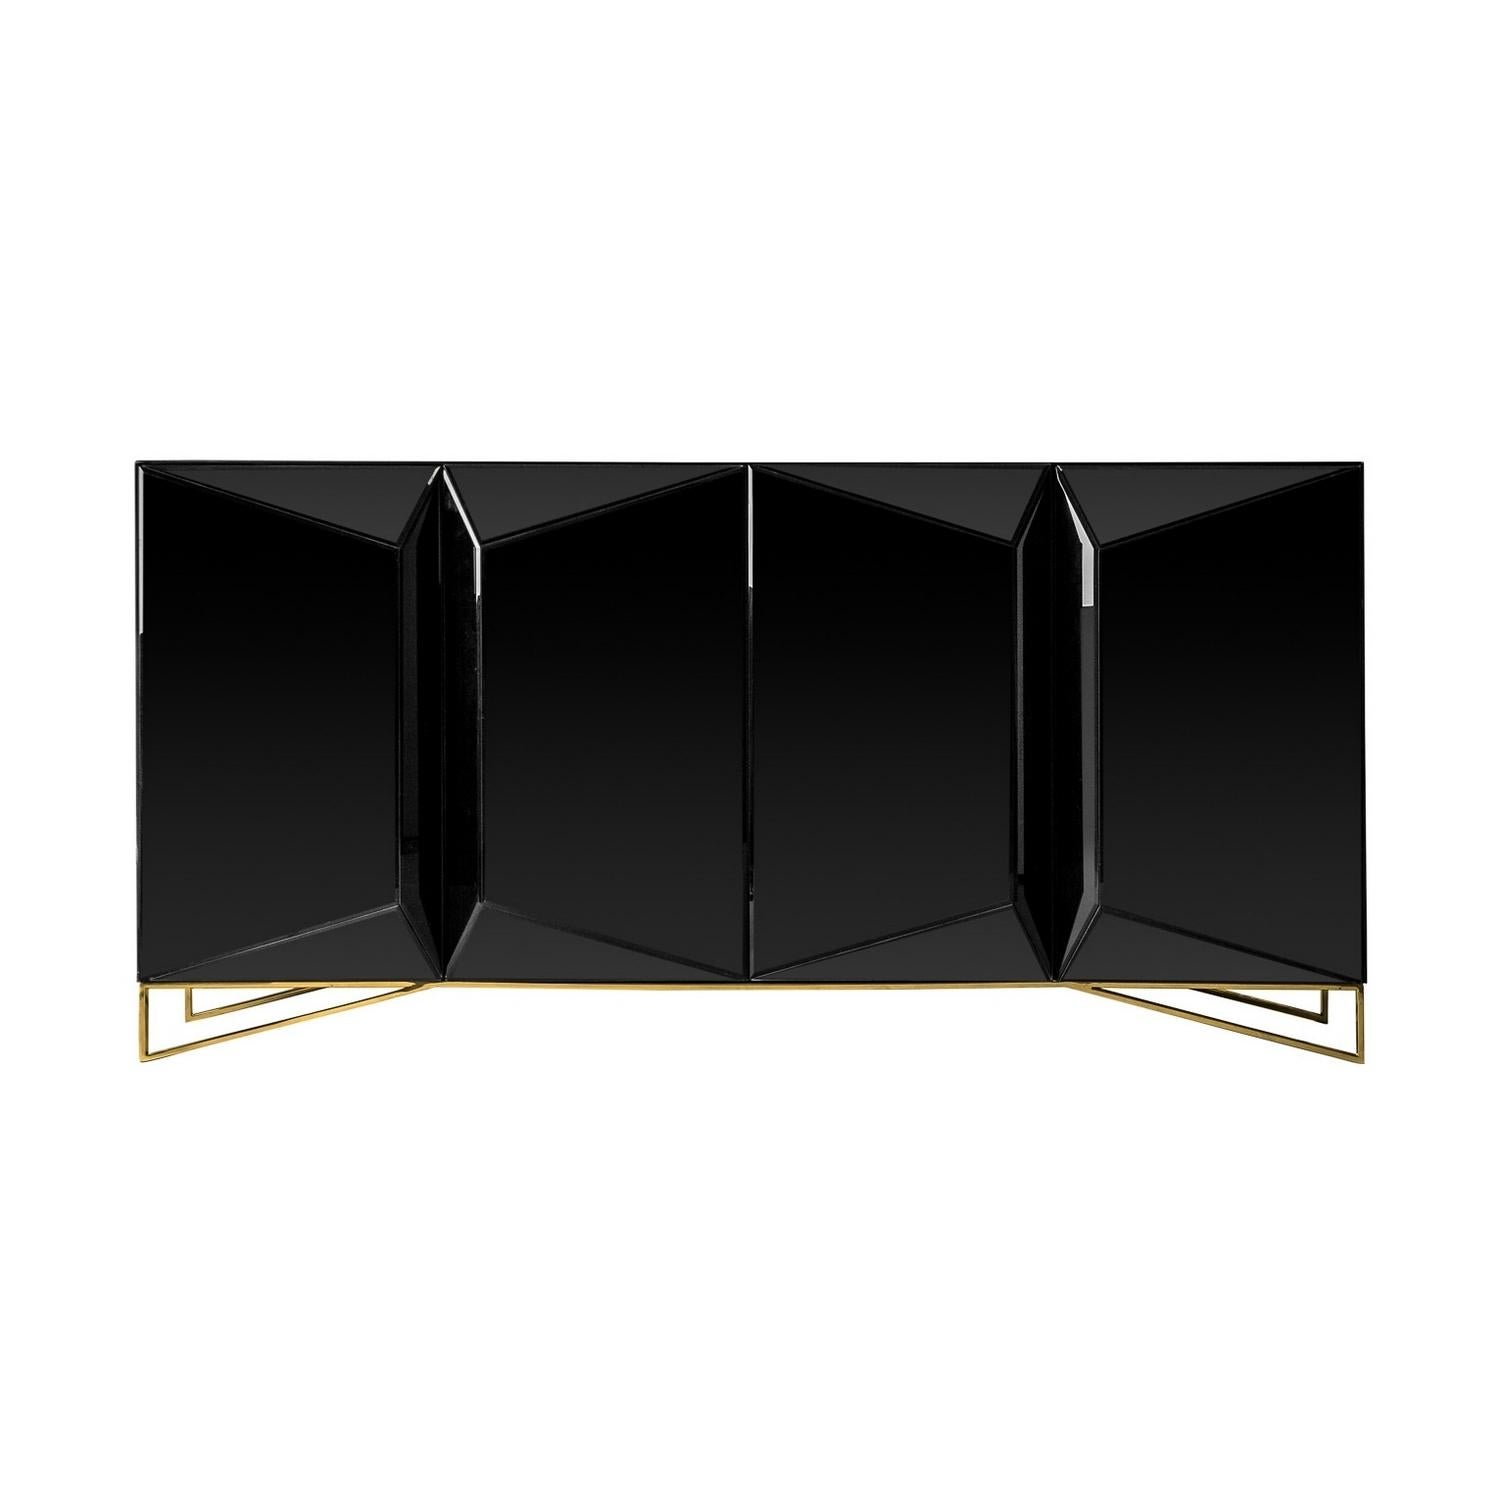 European All In Black Mirrored Design Sideboard